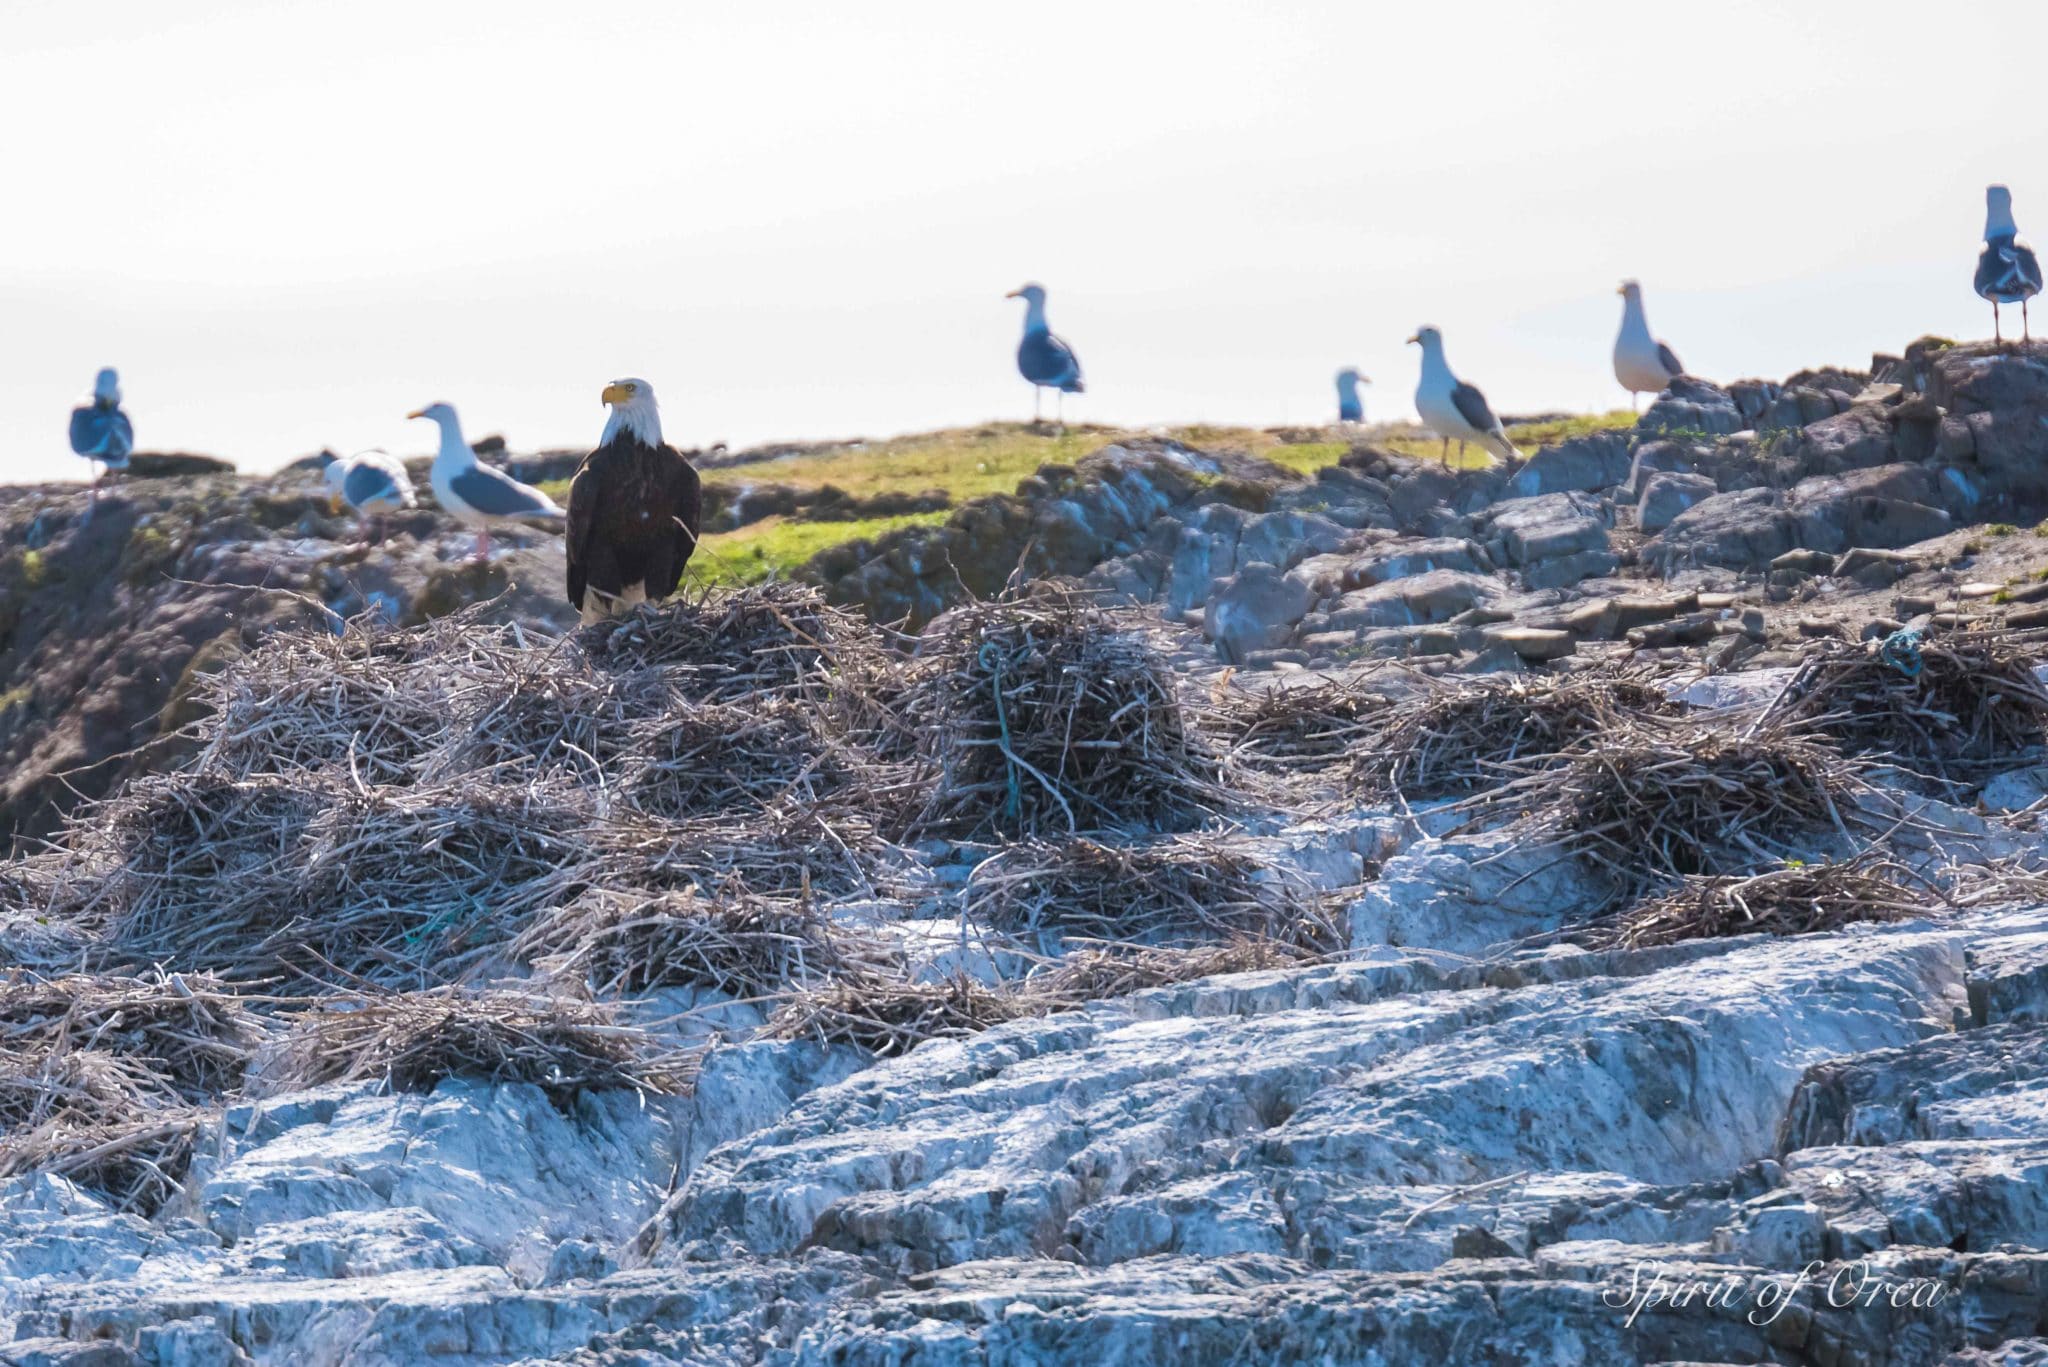 Bald Eagle among nests of gulls